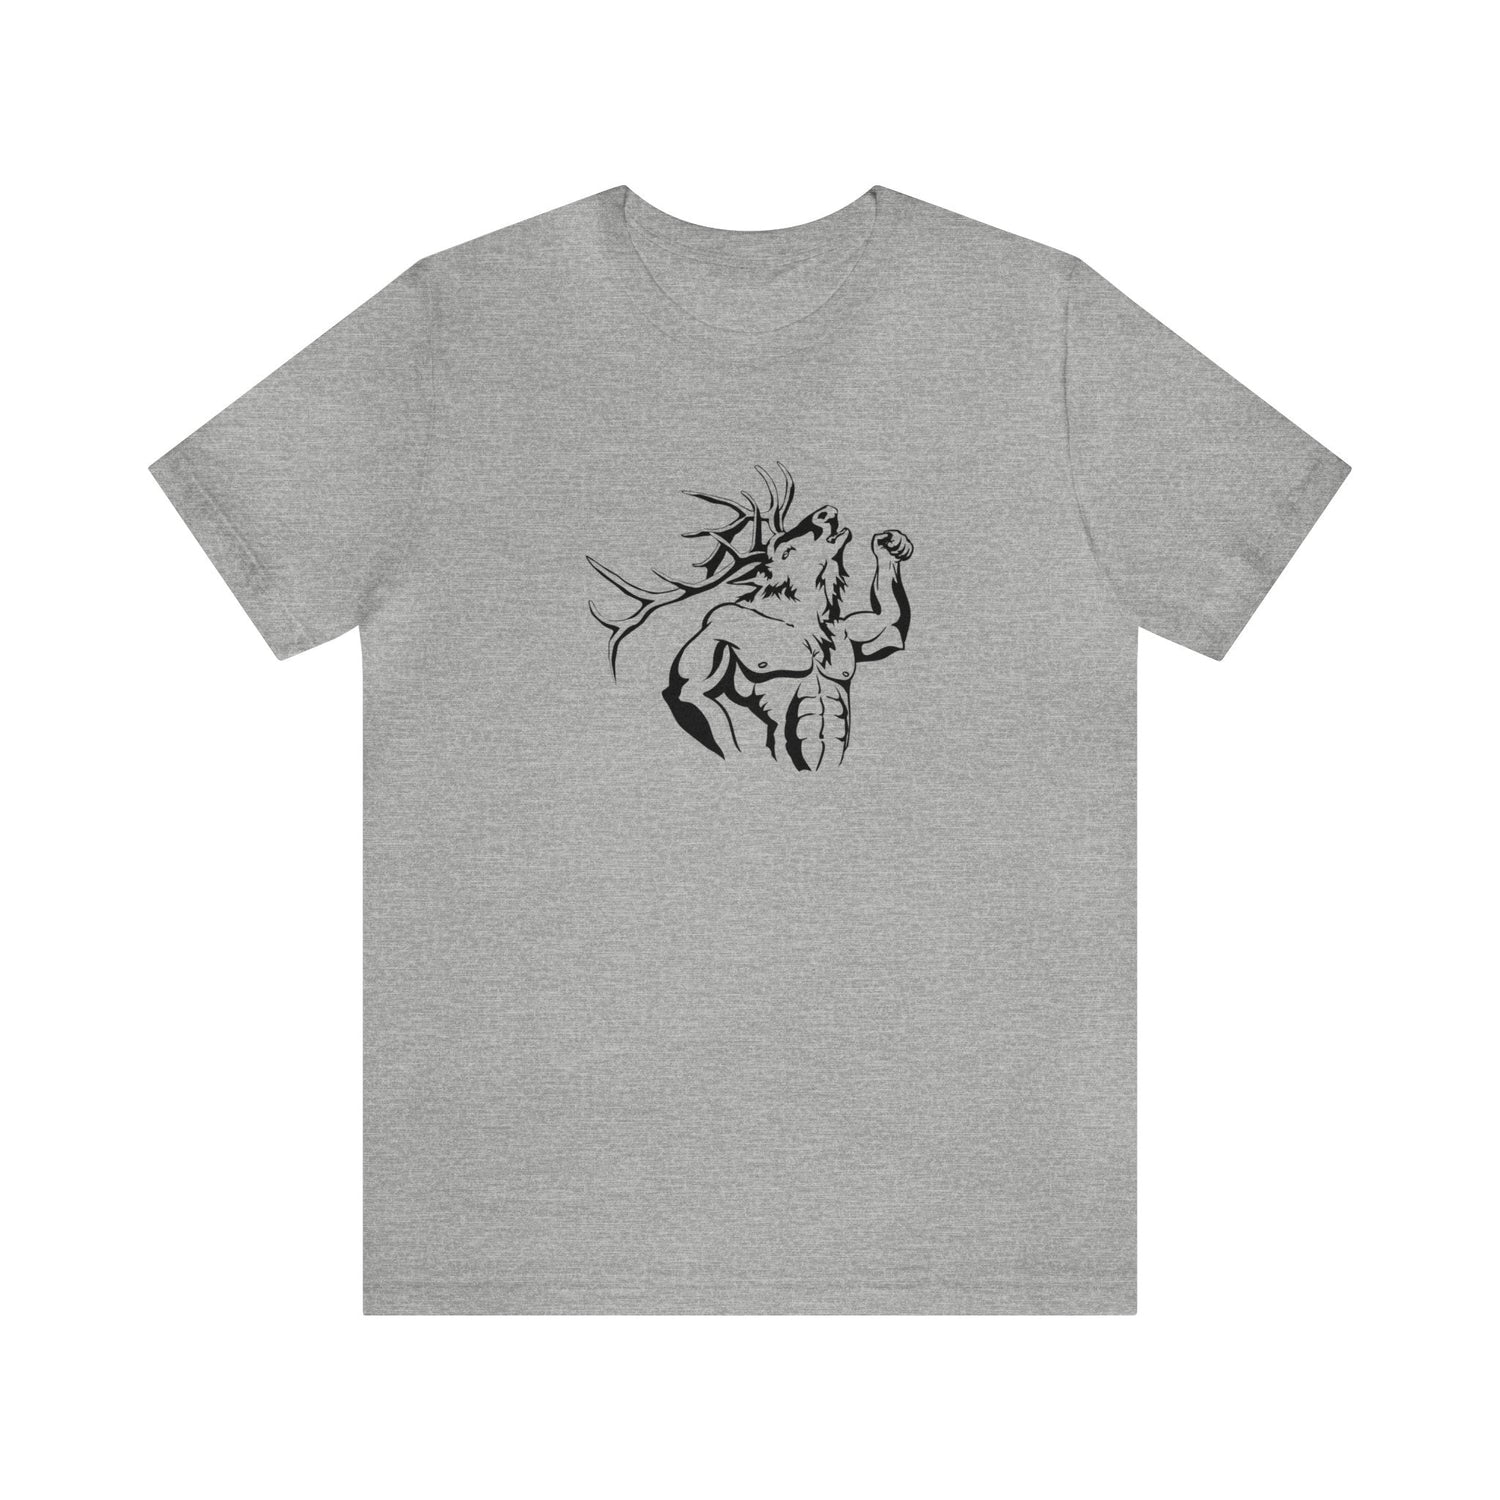 Western elk hunting t-shirt, color light grey, front design placement